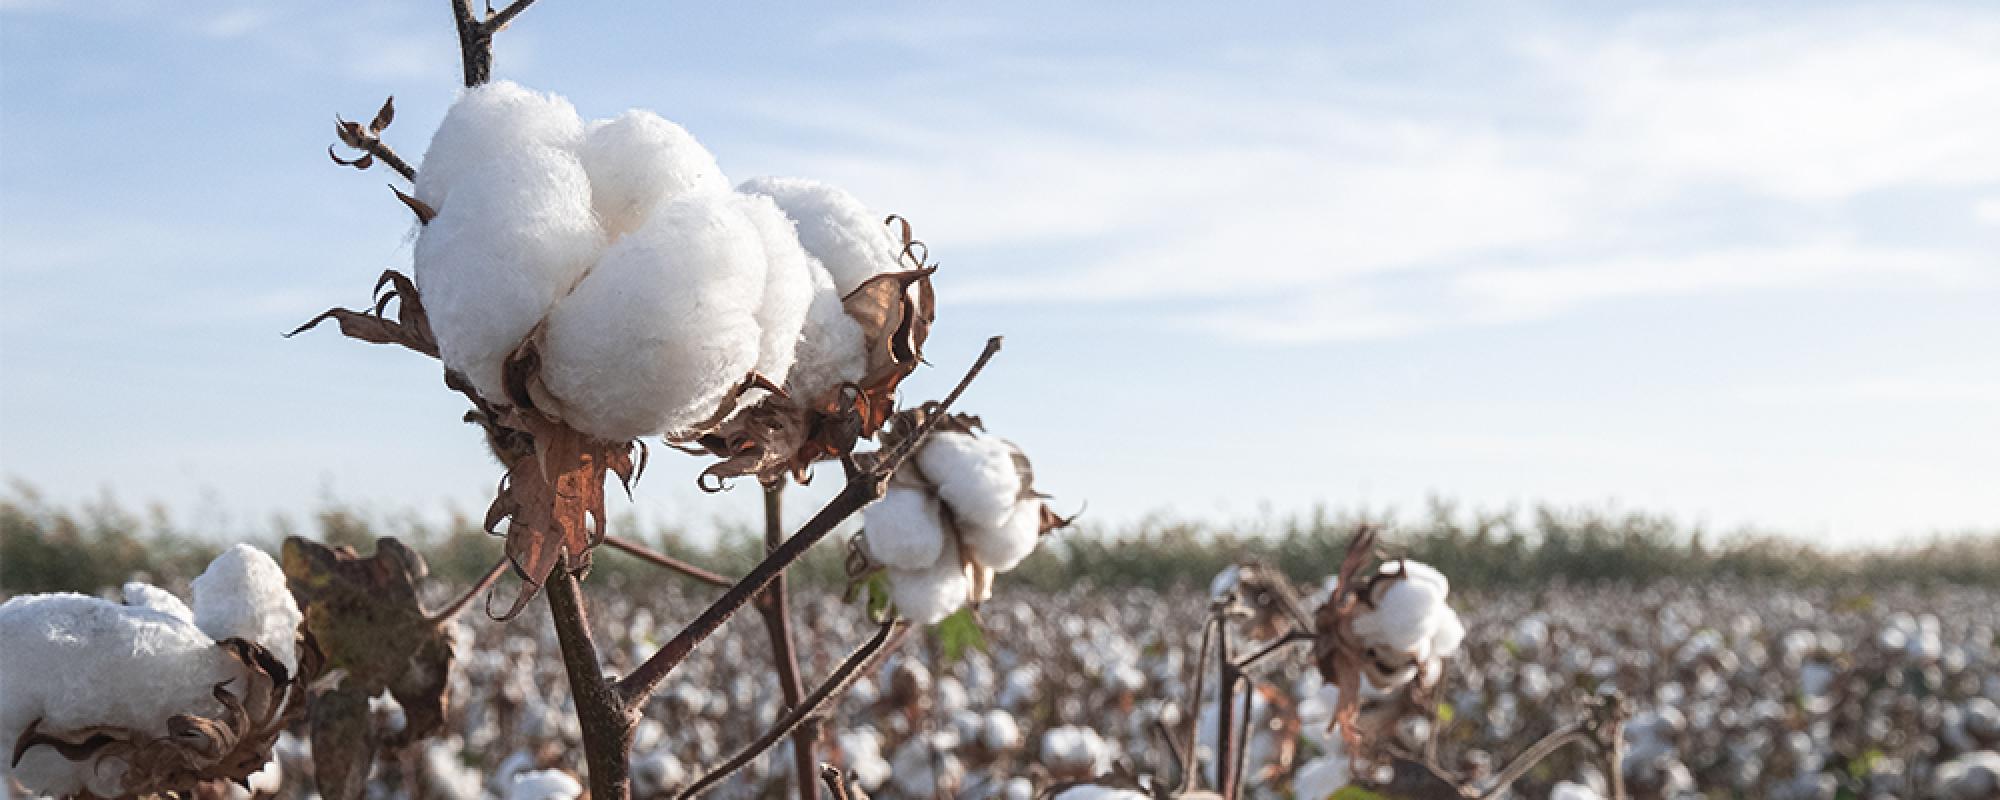 Photo of cotton field